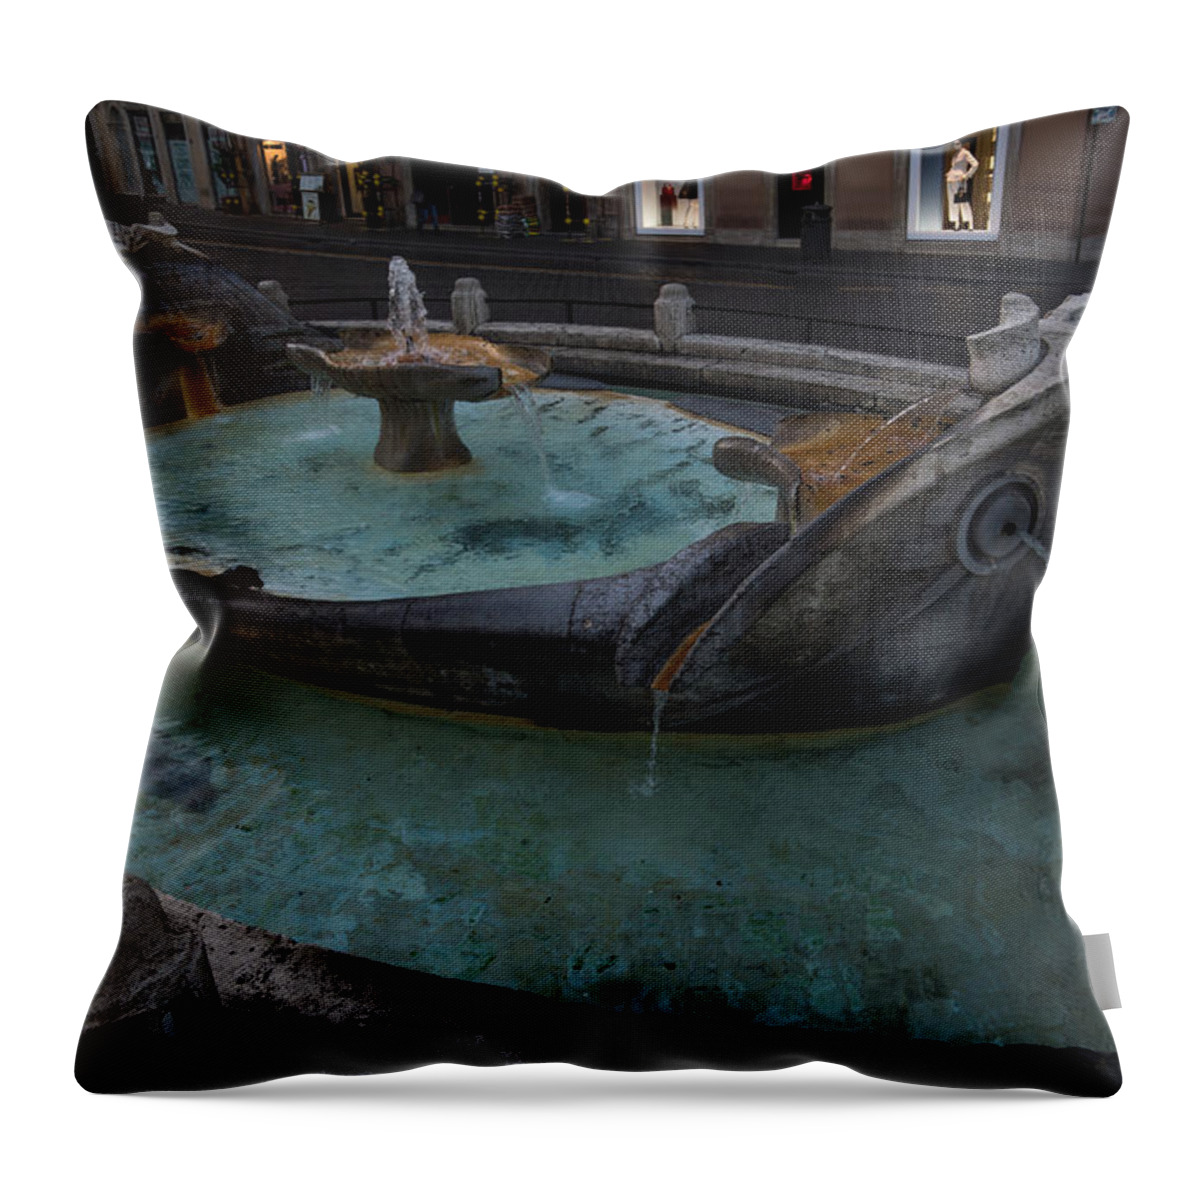 Rome Throw Pillow featuring the photograph Rome's Fabulous Fountains - Fontana della Barcaccia at the Spanish Steps by Georgia Mizuleva